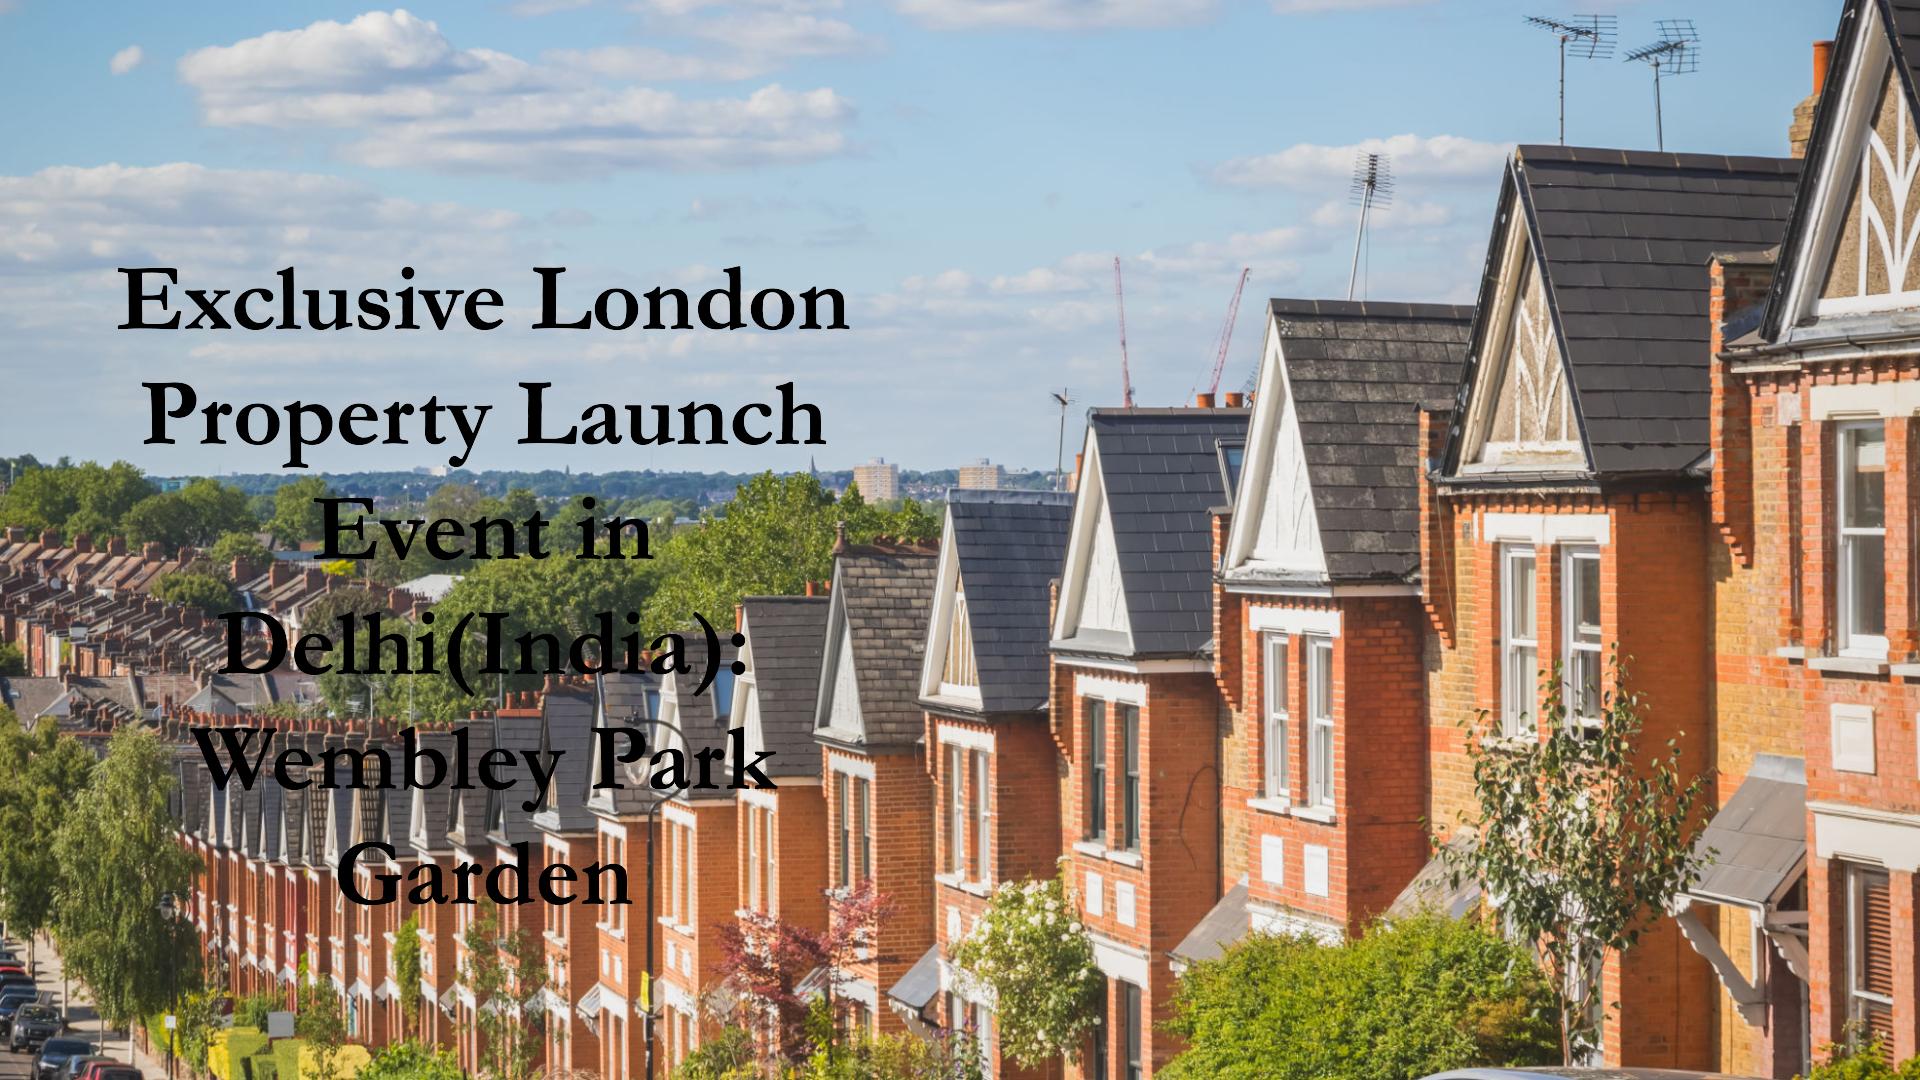 Exclusive London Property Launch Event in Delhi(India): Wembley Park Garden